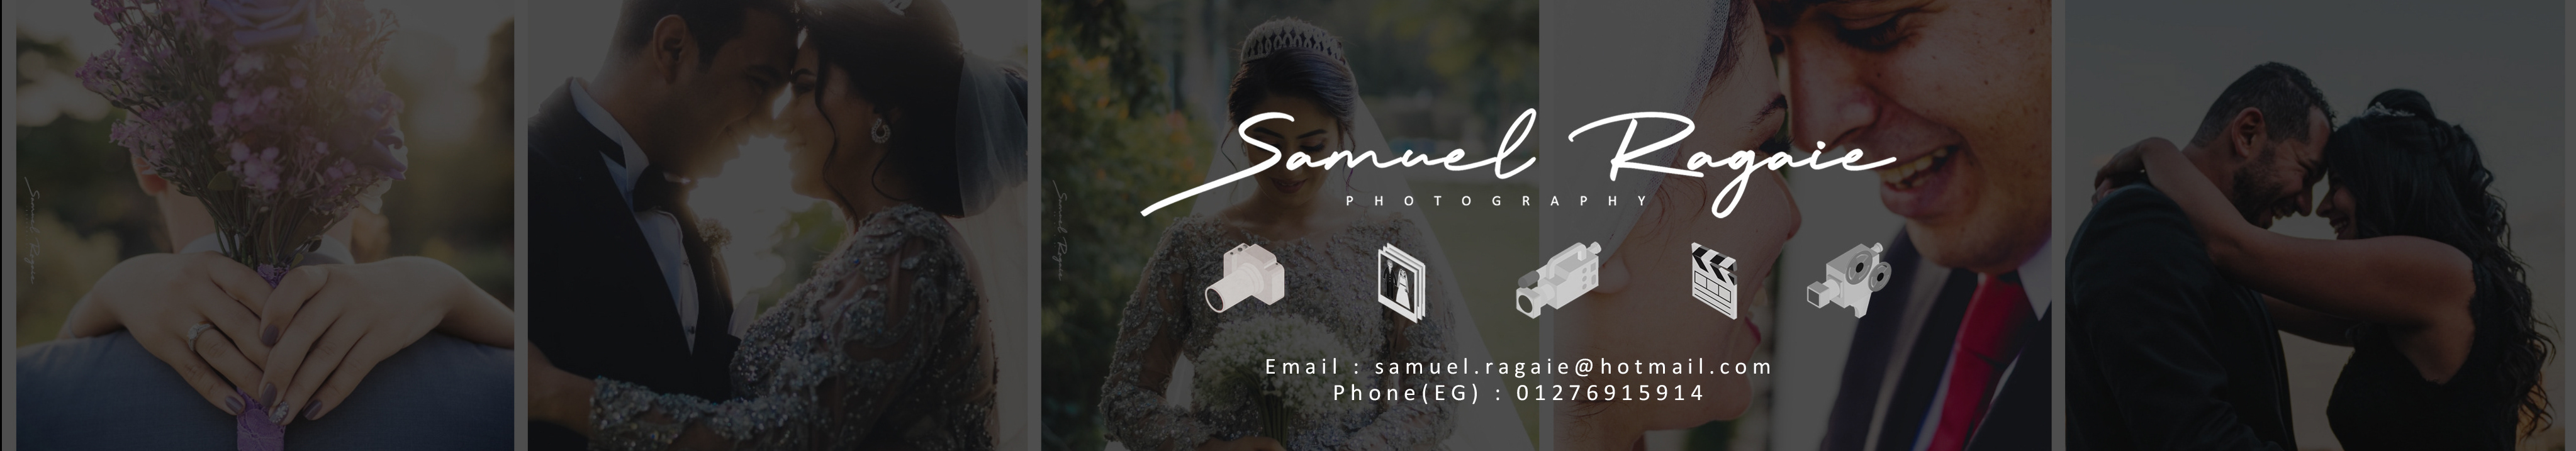 Banner de perfil de Samuel Ragaie